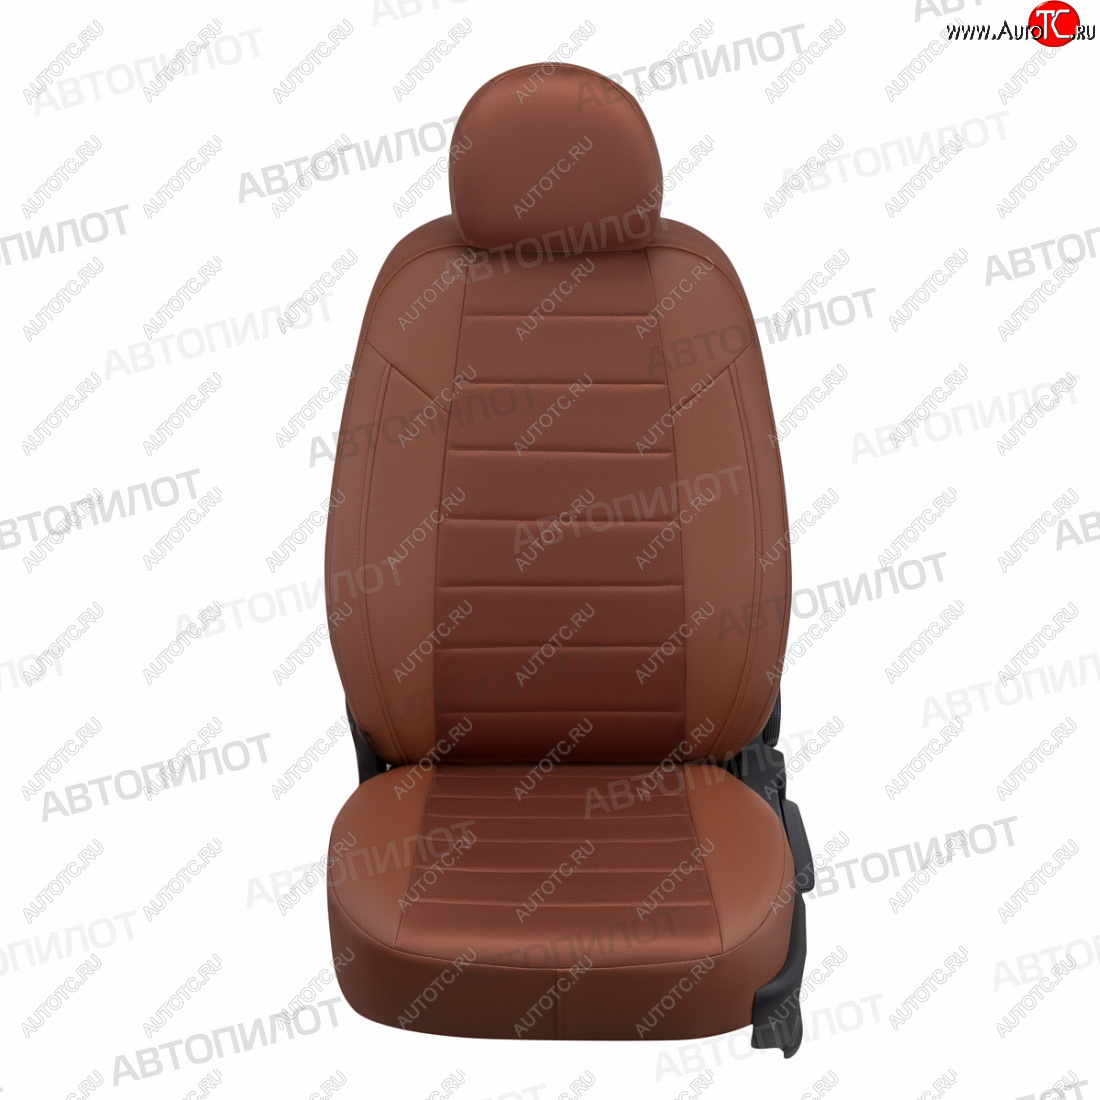 13 449 р. Чехлы сидений (экокожа/алькантара) Автопилот  Hyundai Sonata  YF (2009-2014) (коричневый)